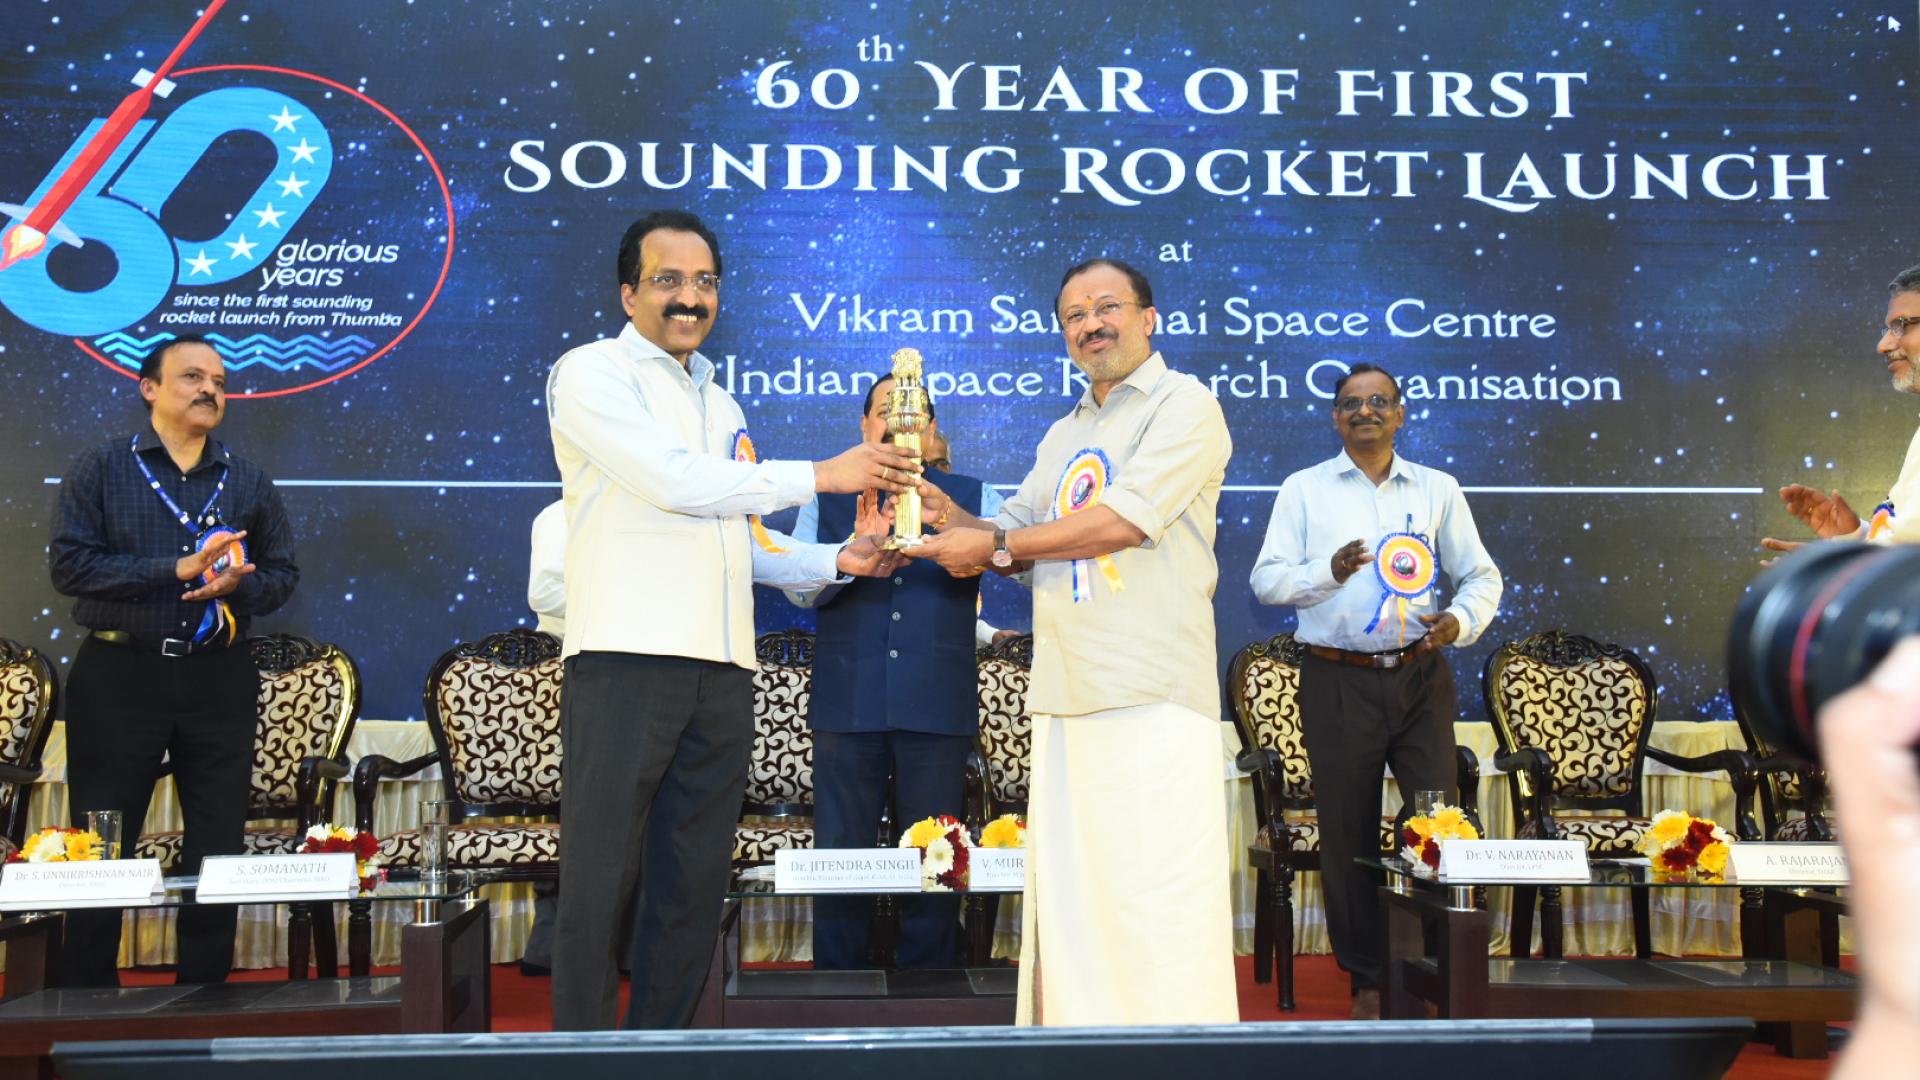 A ceremony at the Vikram Sarabhai Space Centre